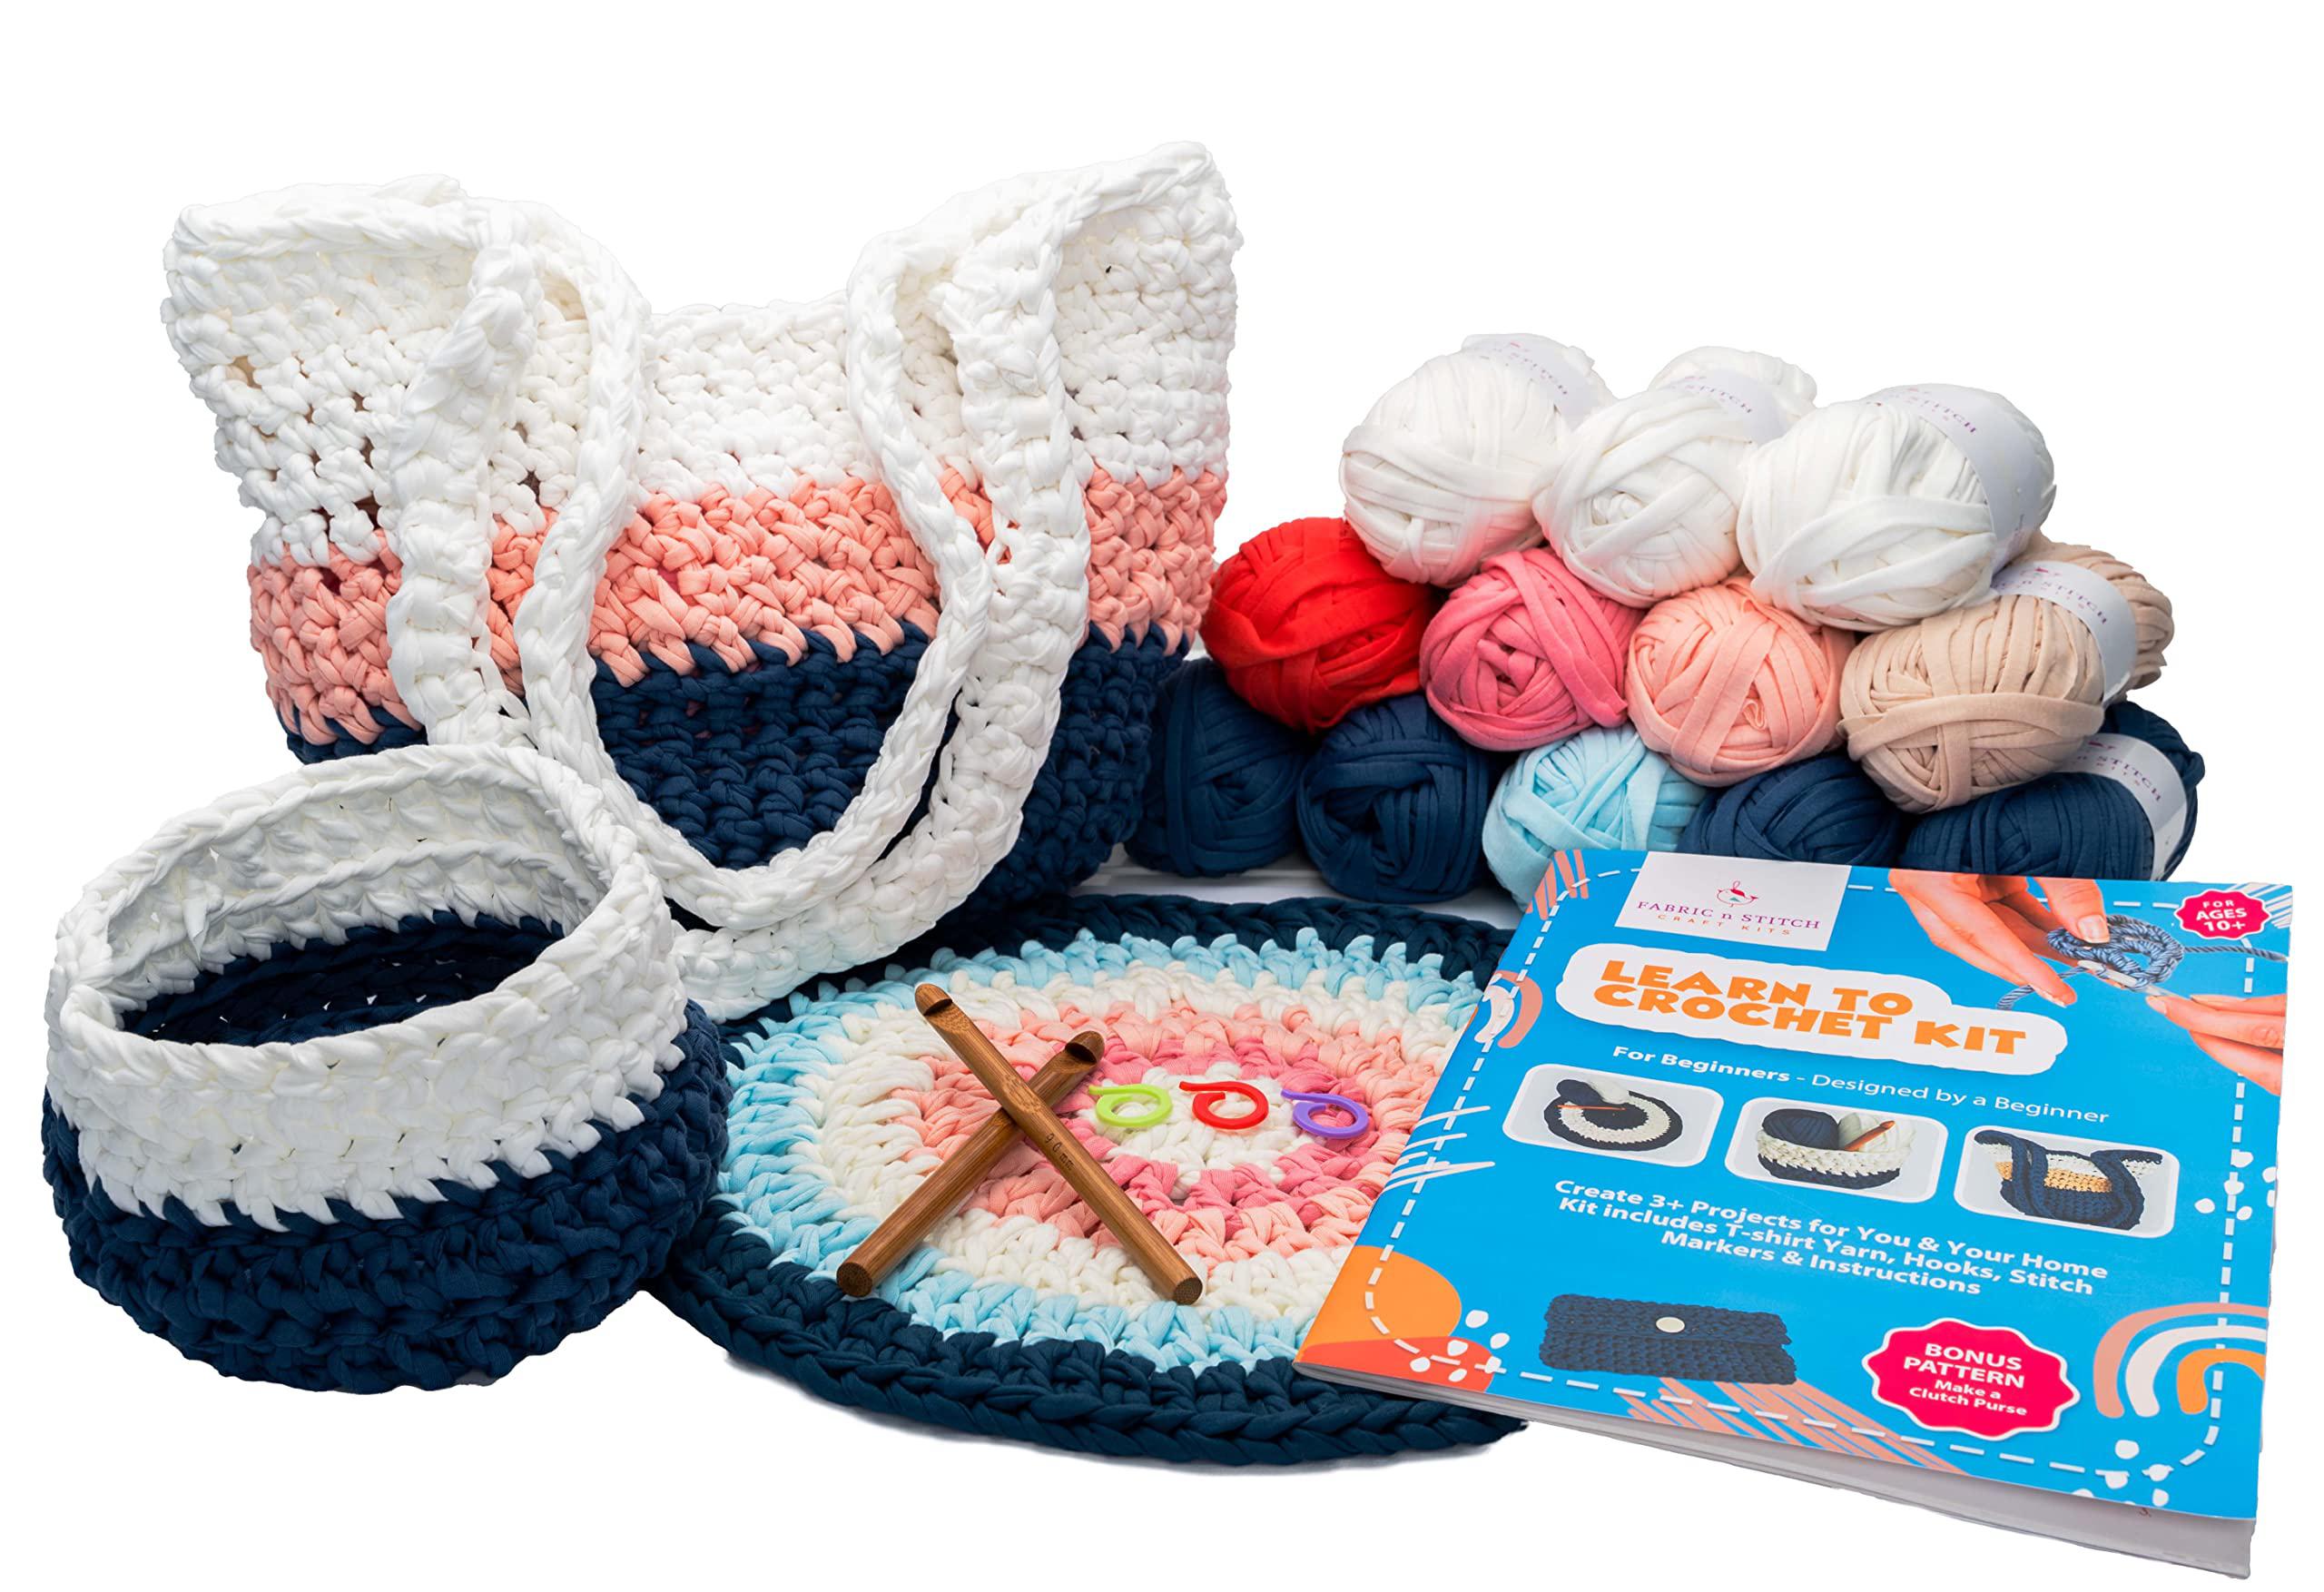 fabric n stitch beginner crochet kit. learn to crochet & create 4